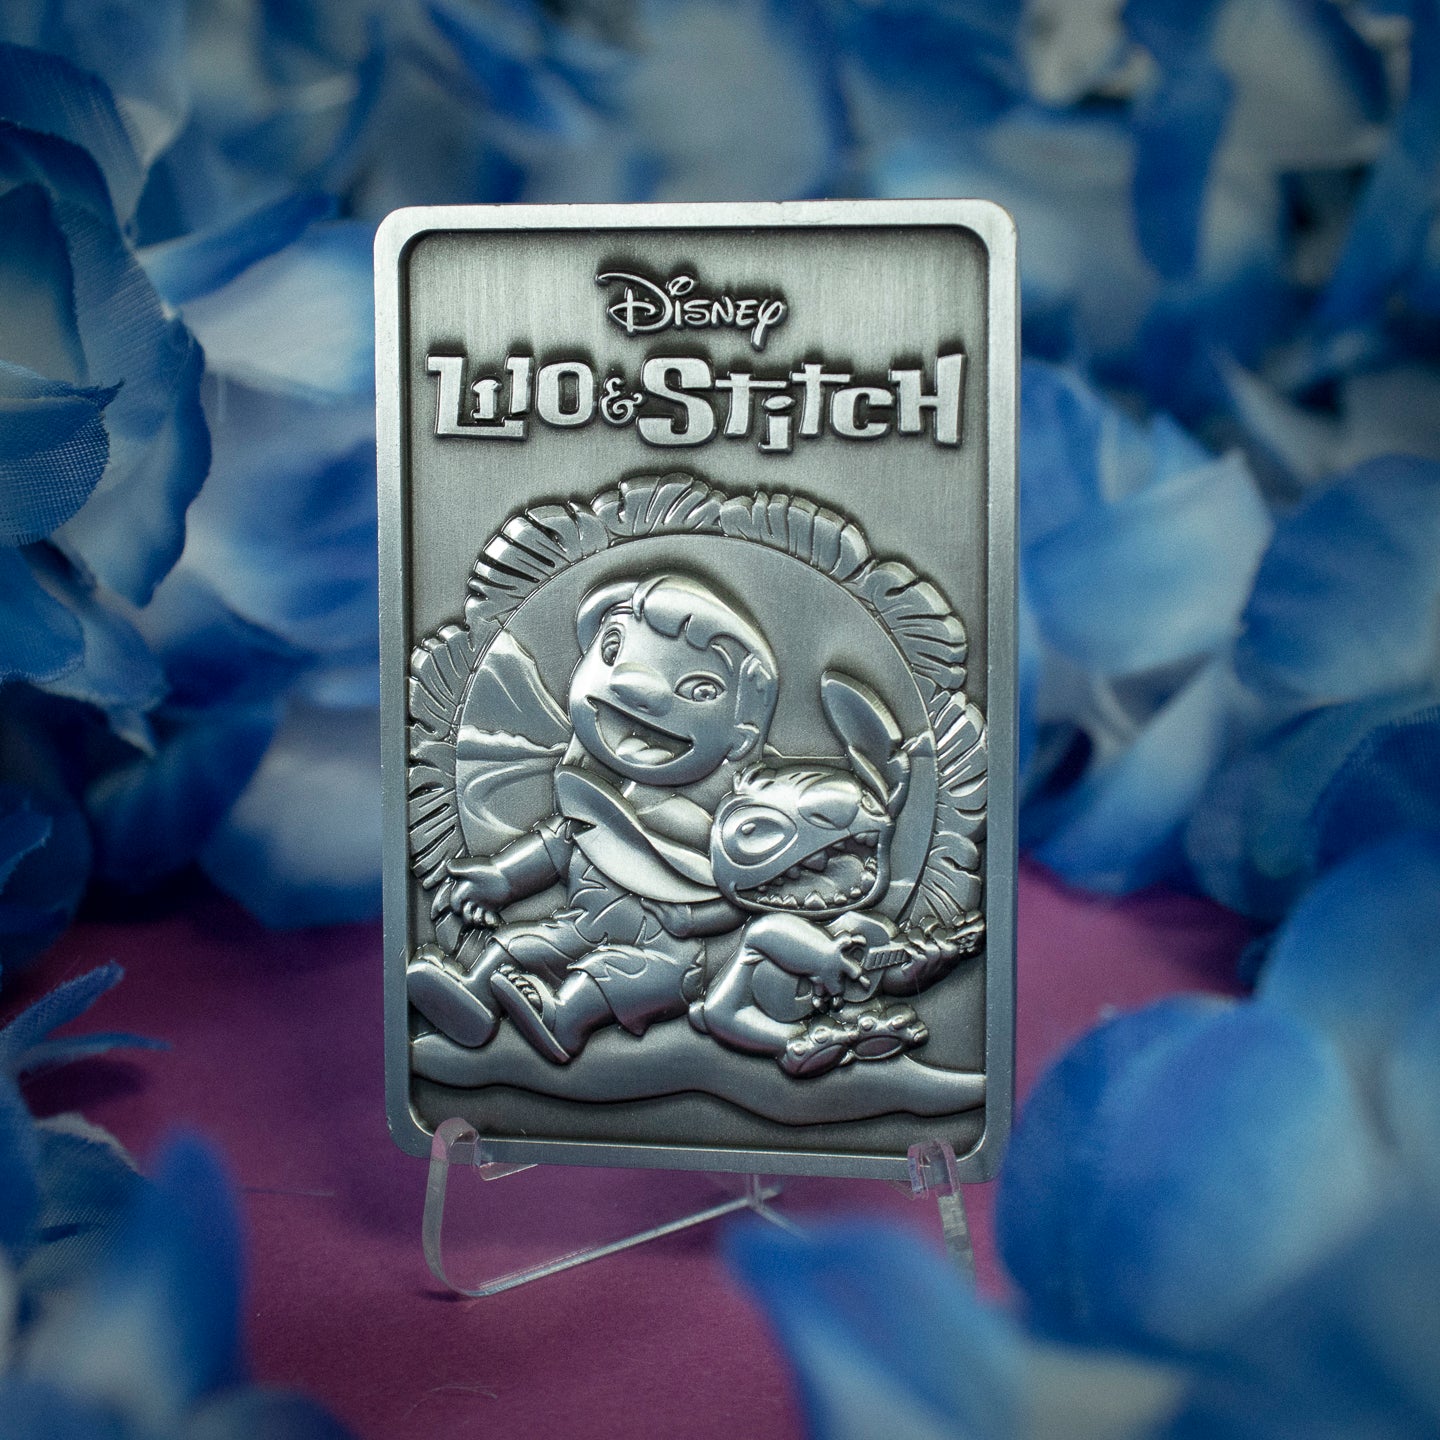 Disney Lilo & Stitch limited edition collectible ingot from Fanattik